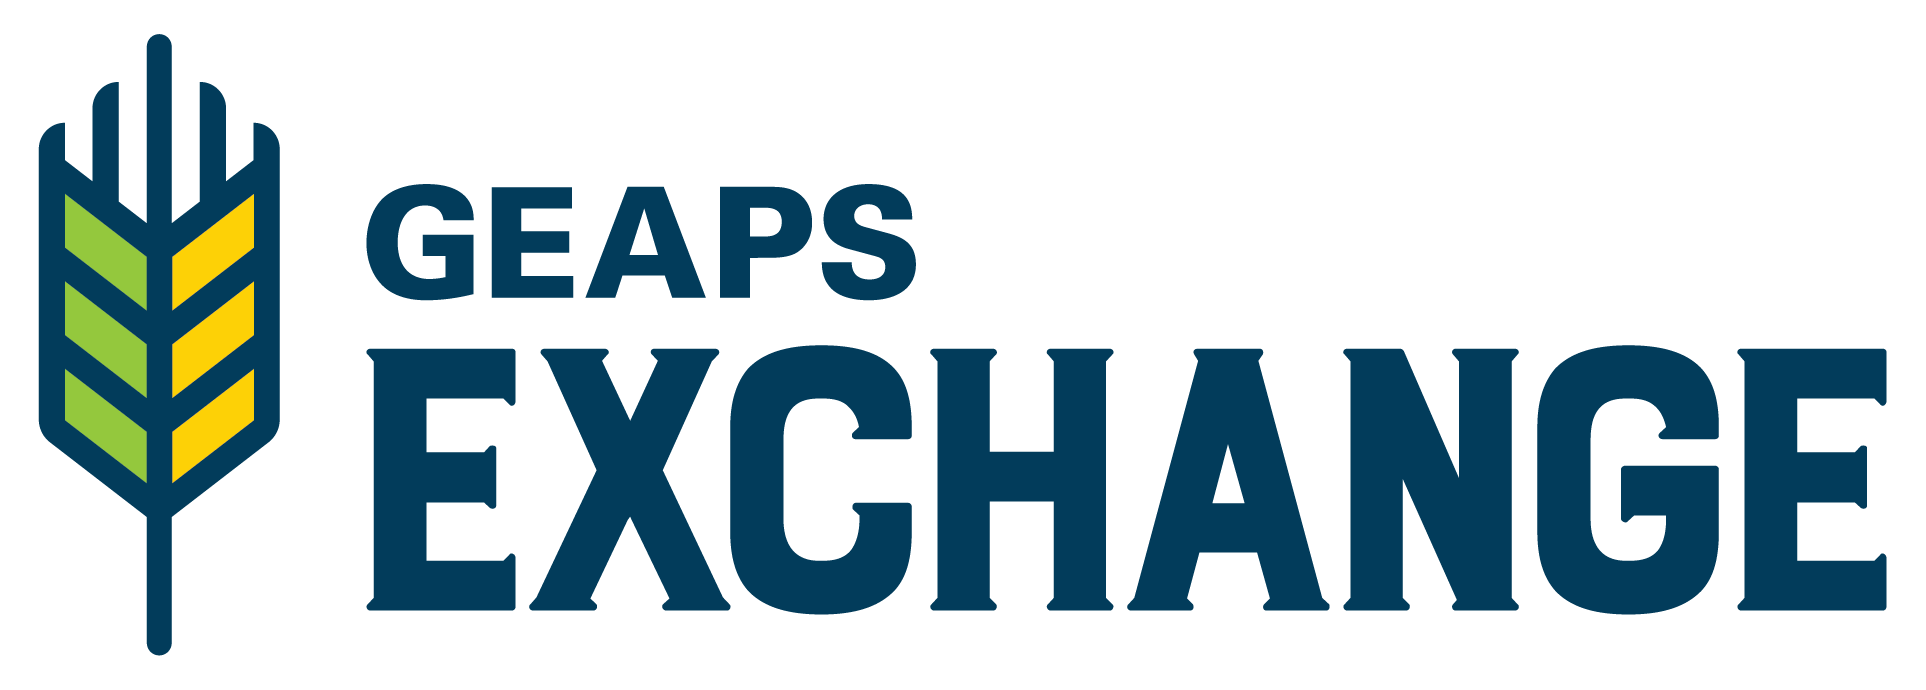 GEAPS Exchange